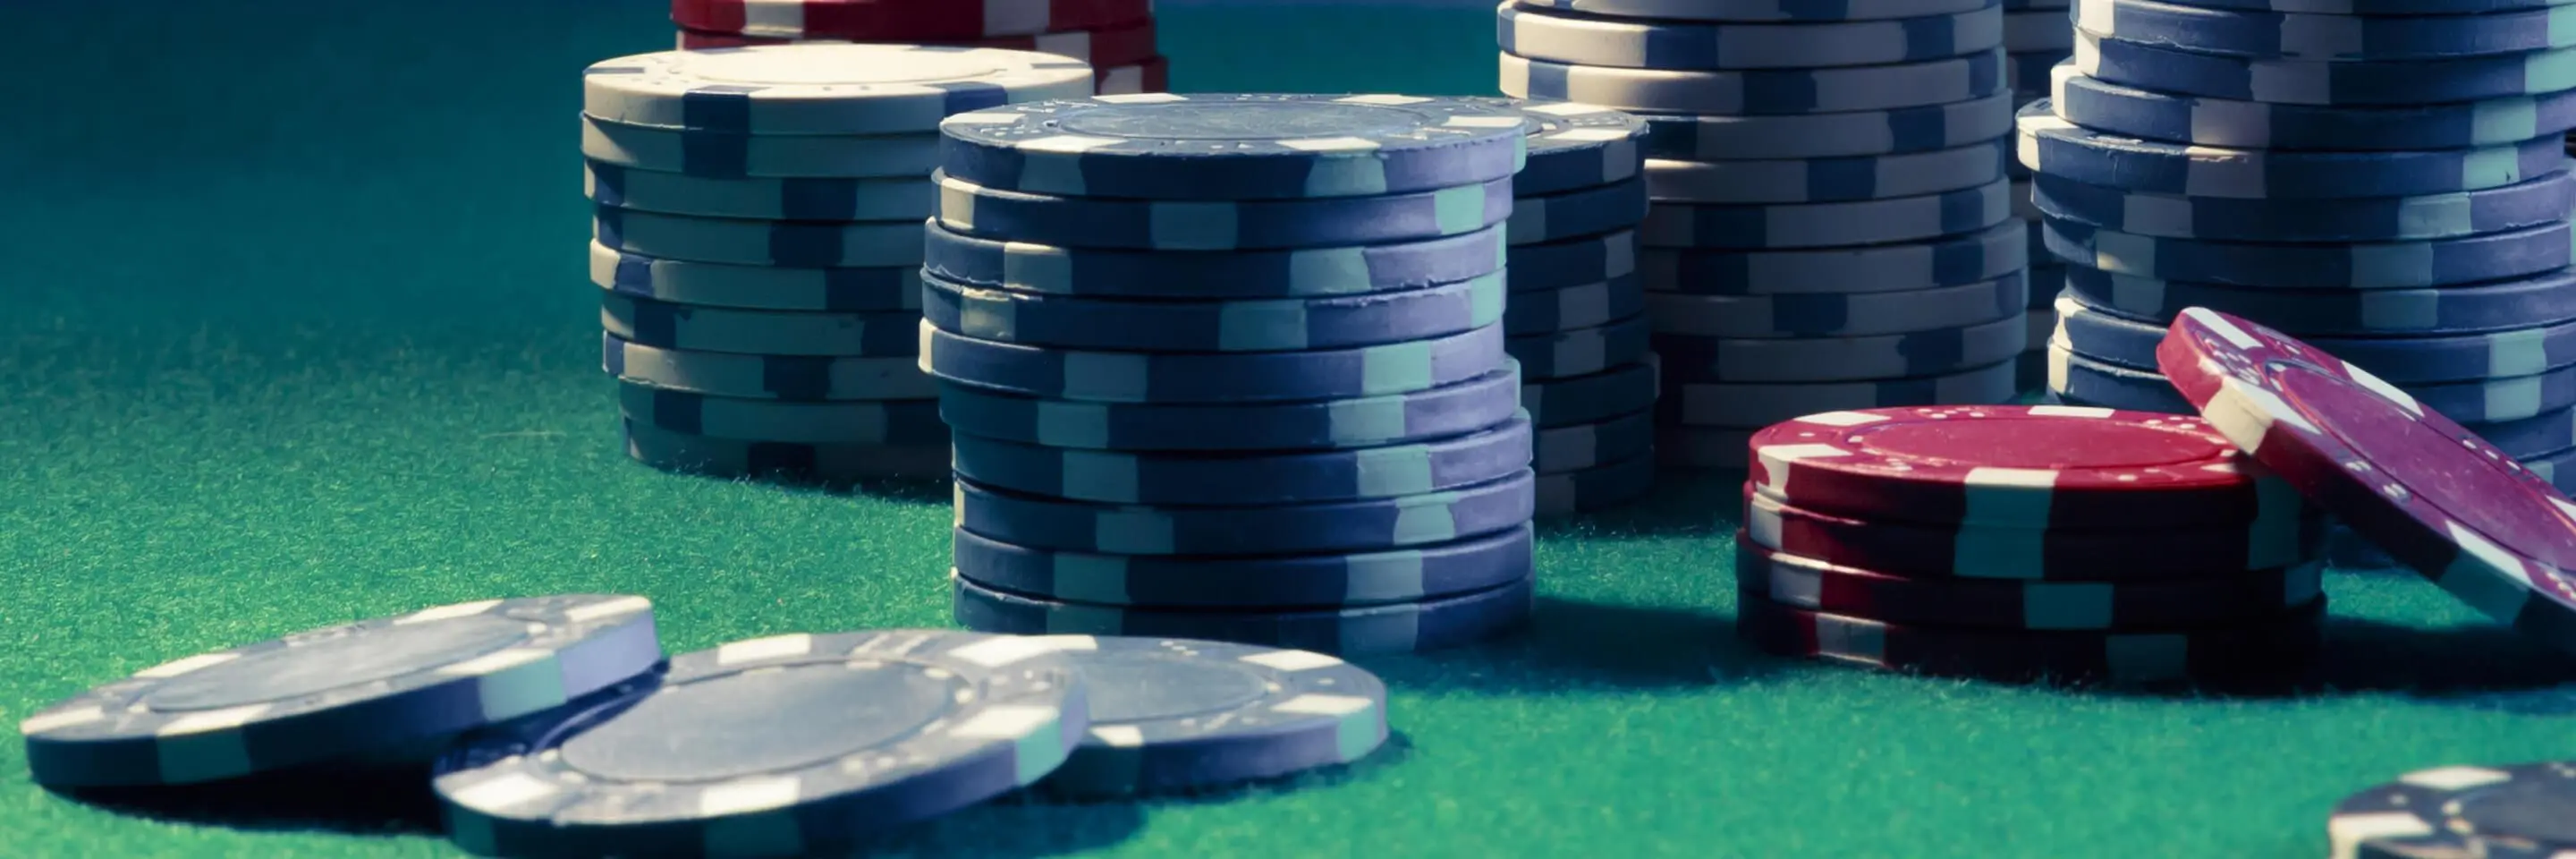 Casino Table games chips Banner - for Desktop